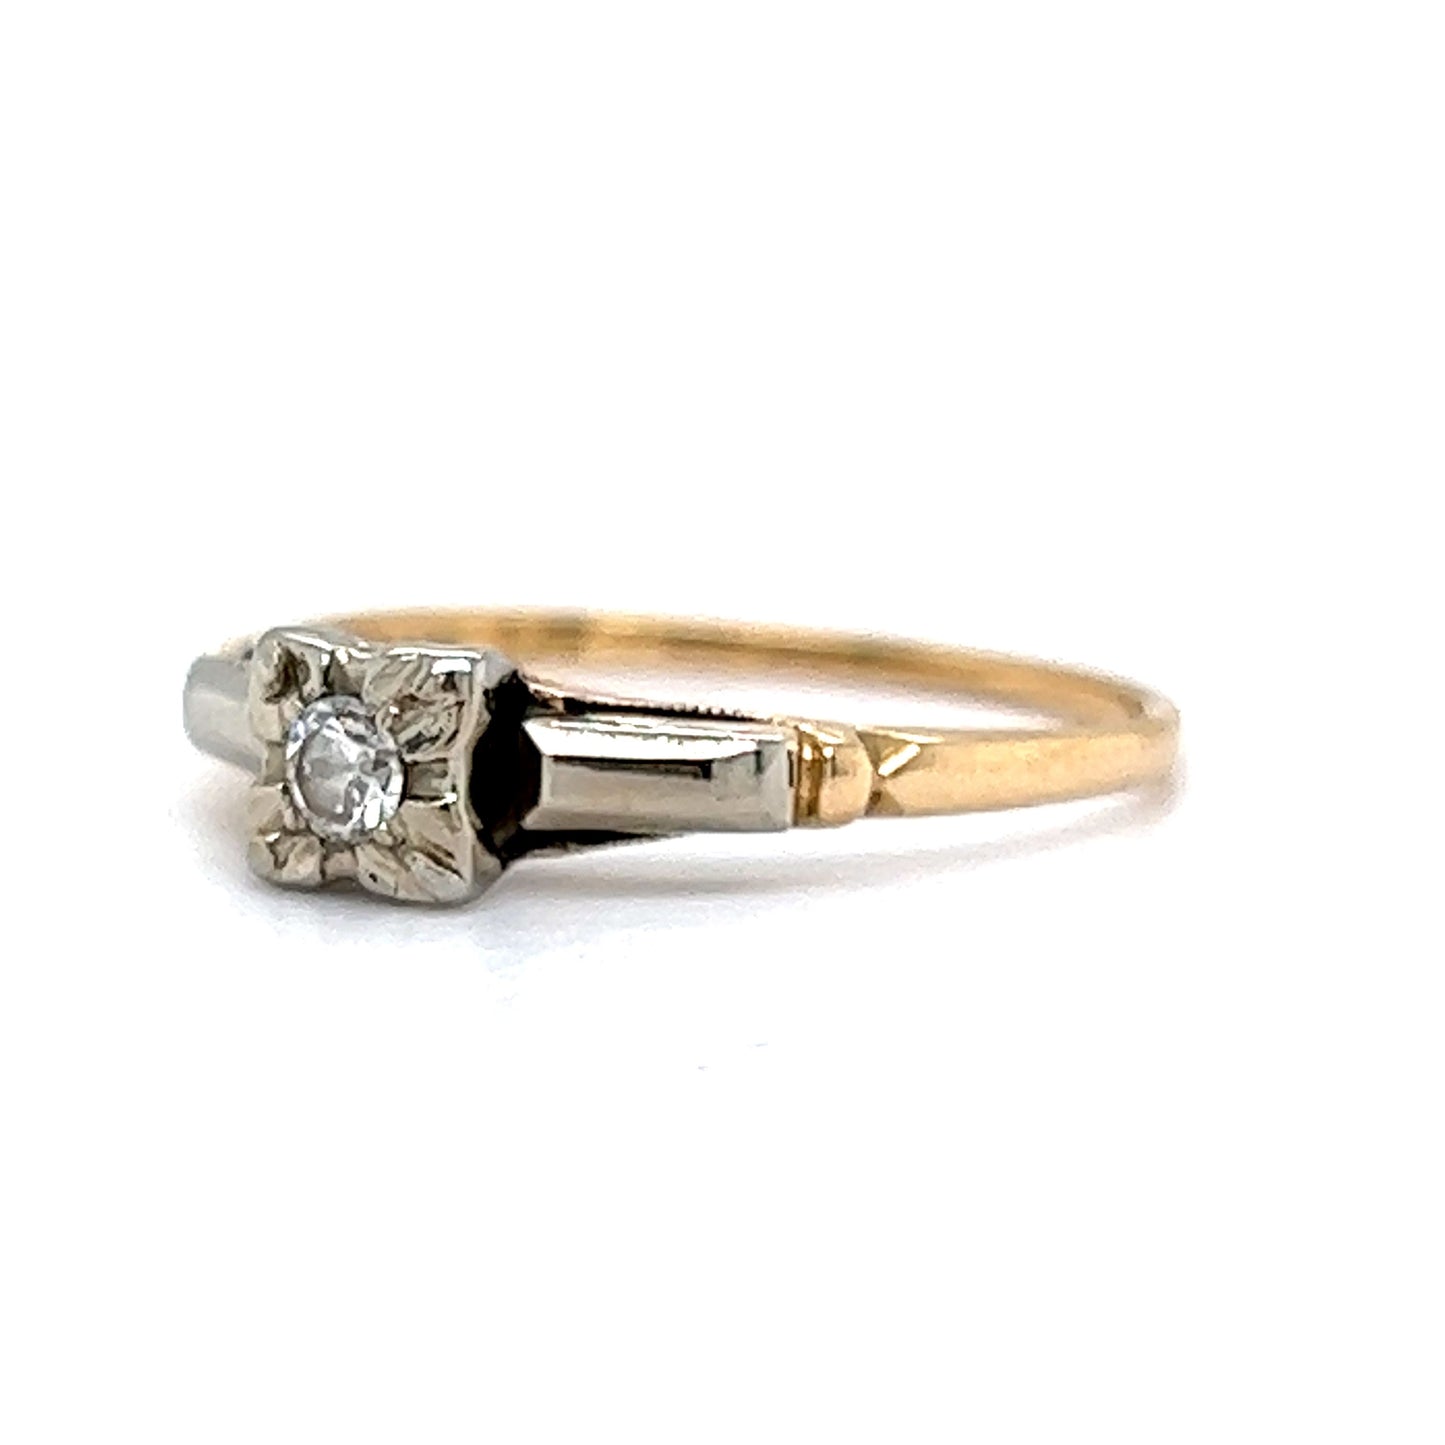 Vintage .07 Diamond Engagement Ring in 14k Gold